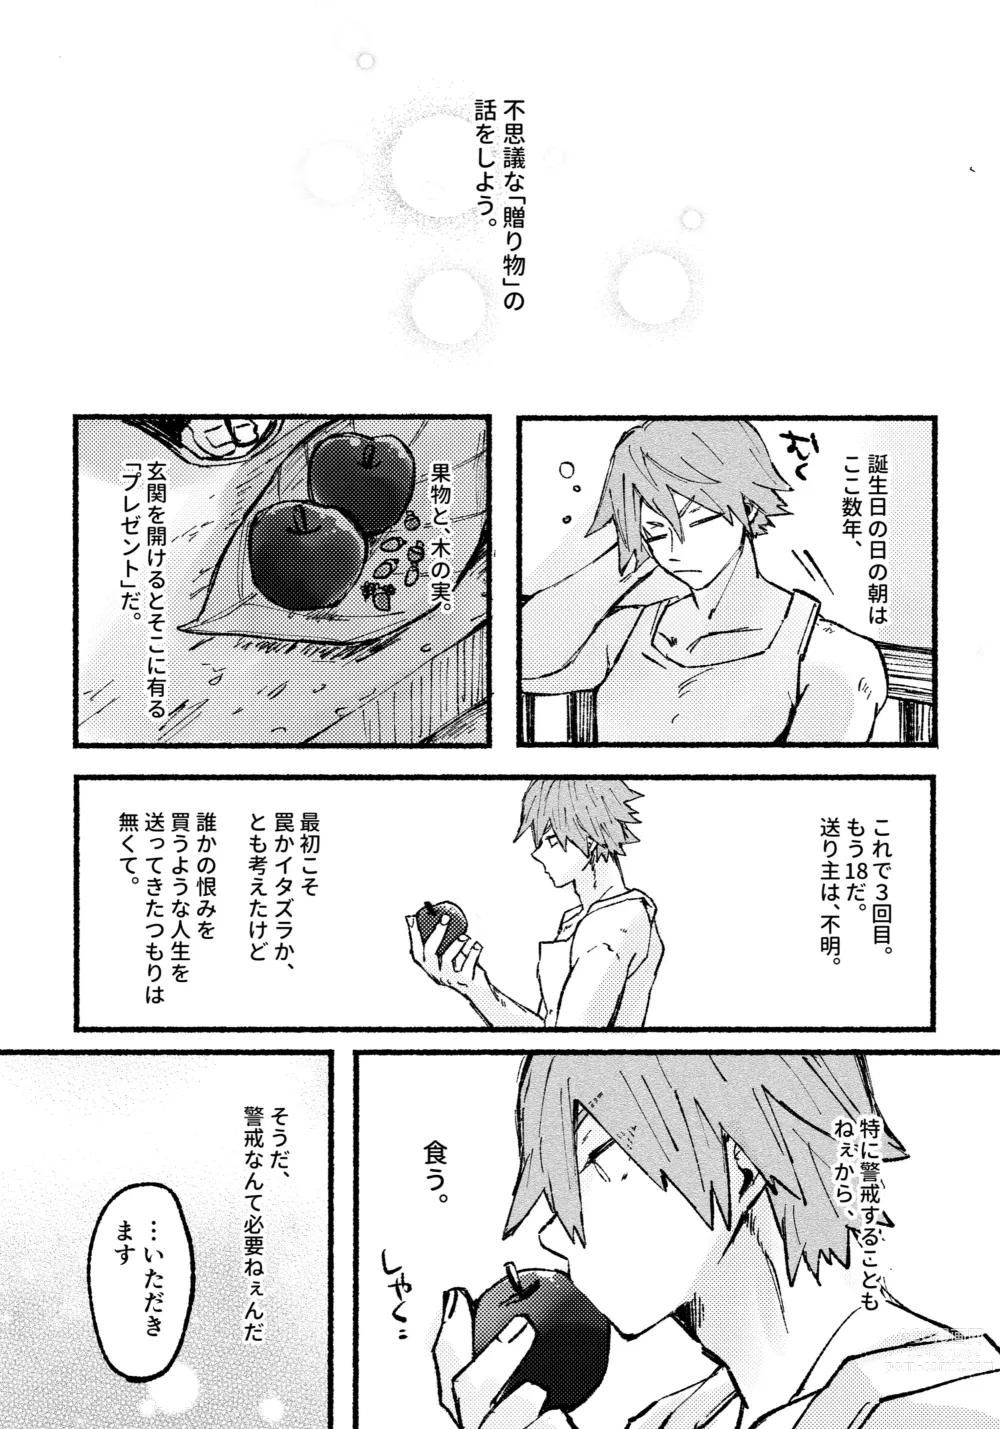 Page 29 of doujinshi Monopolize - You